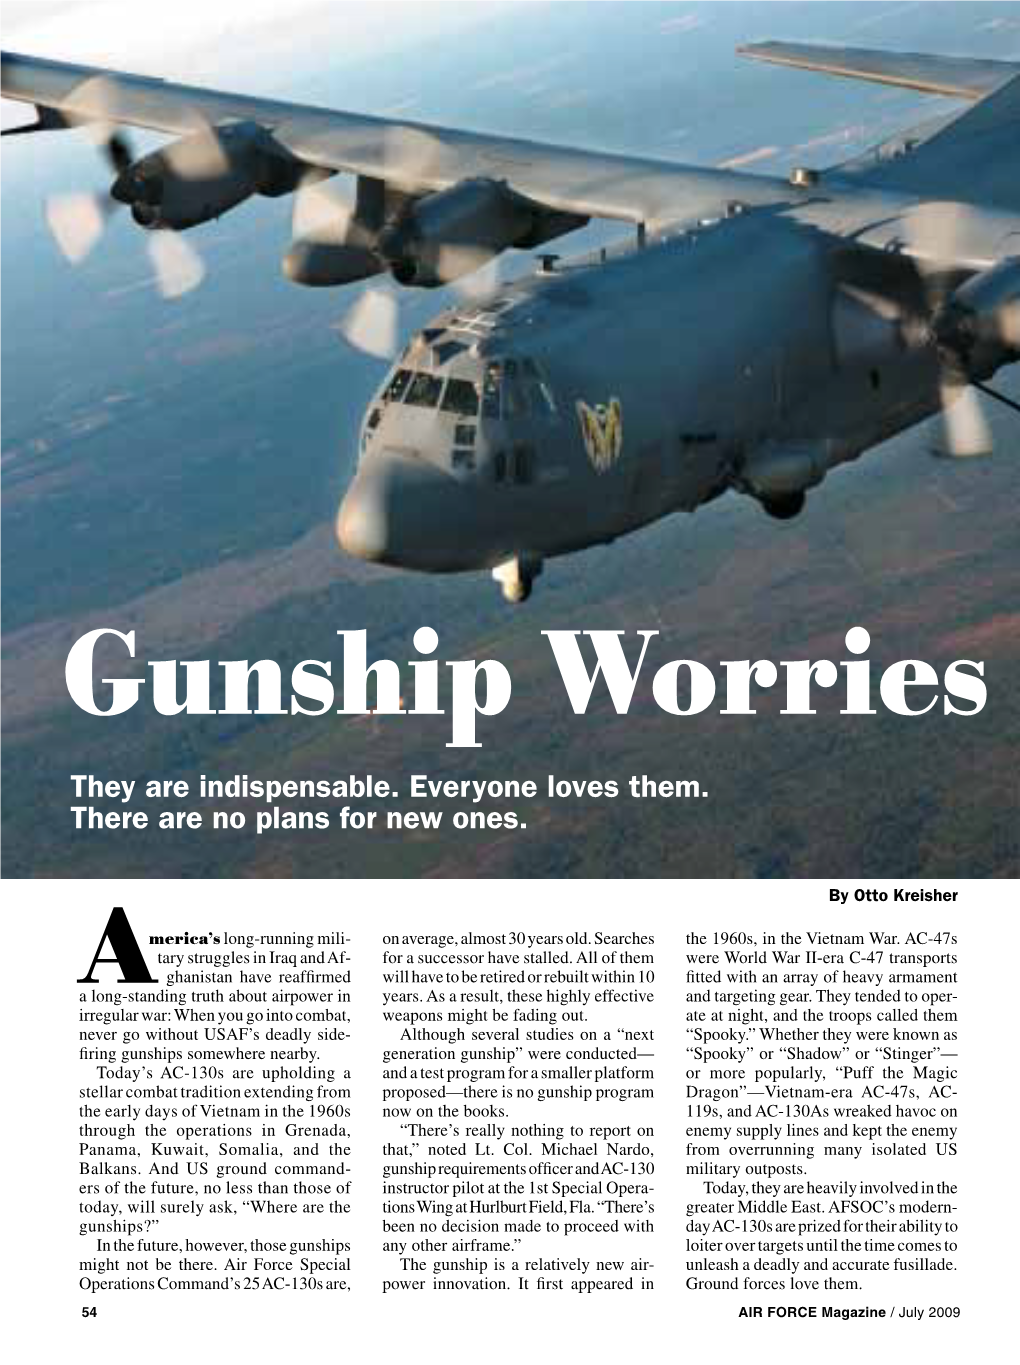 Gunship Worries Air Force Magazine Article